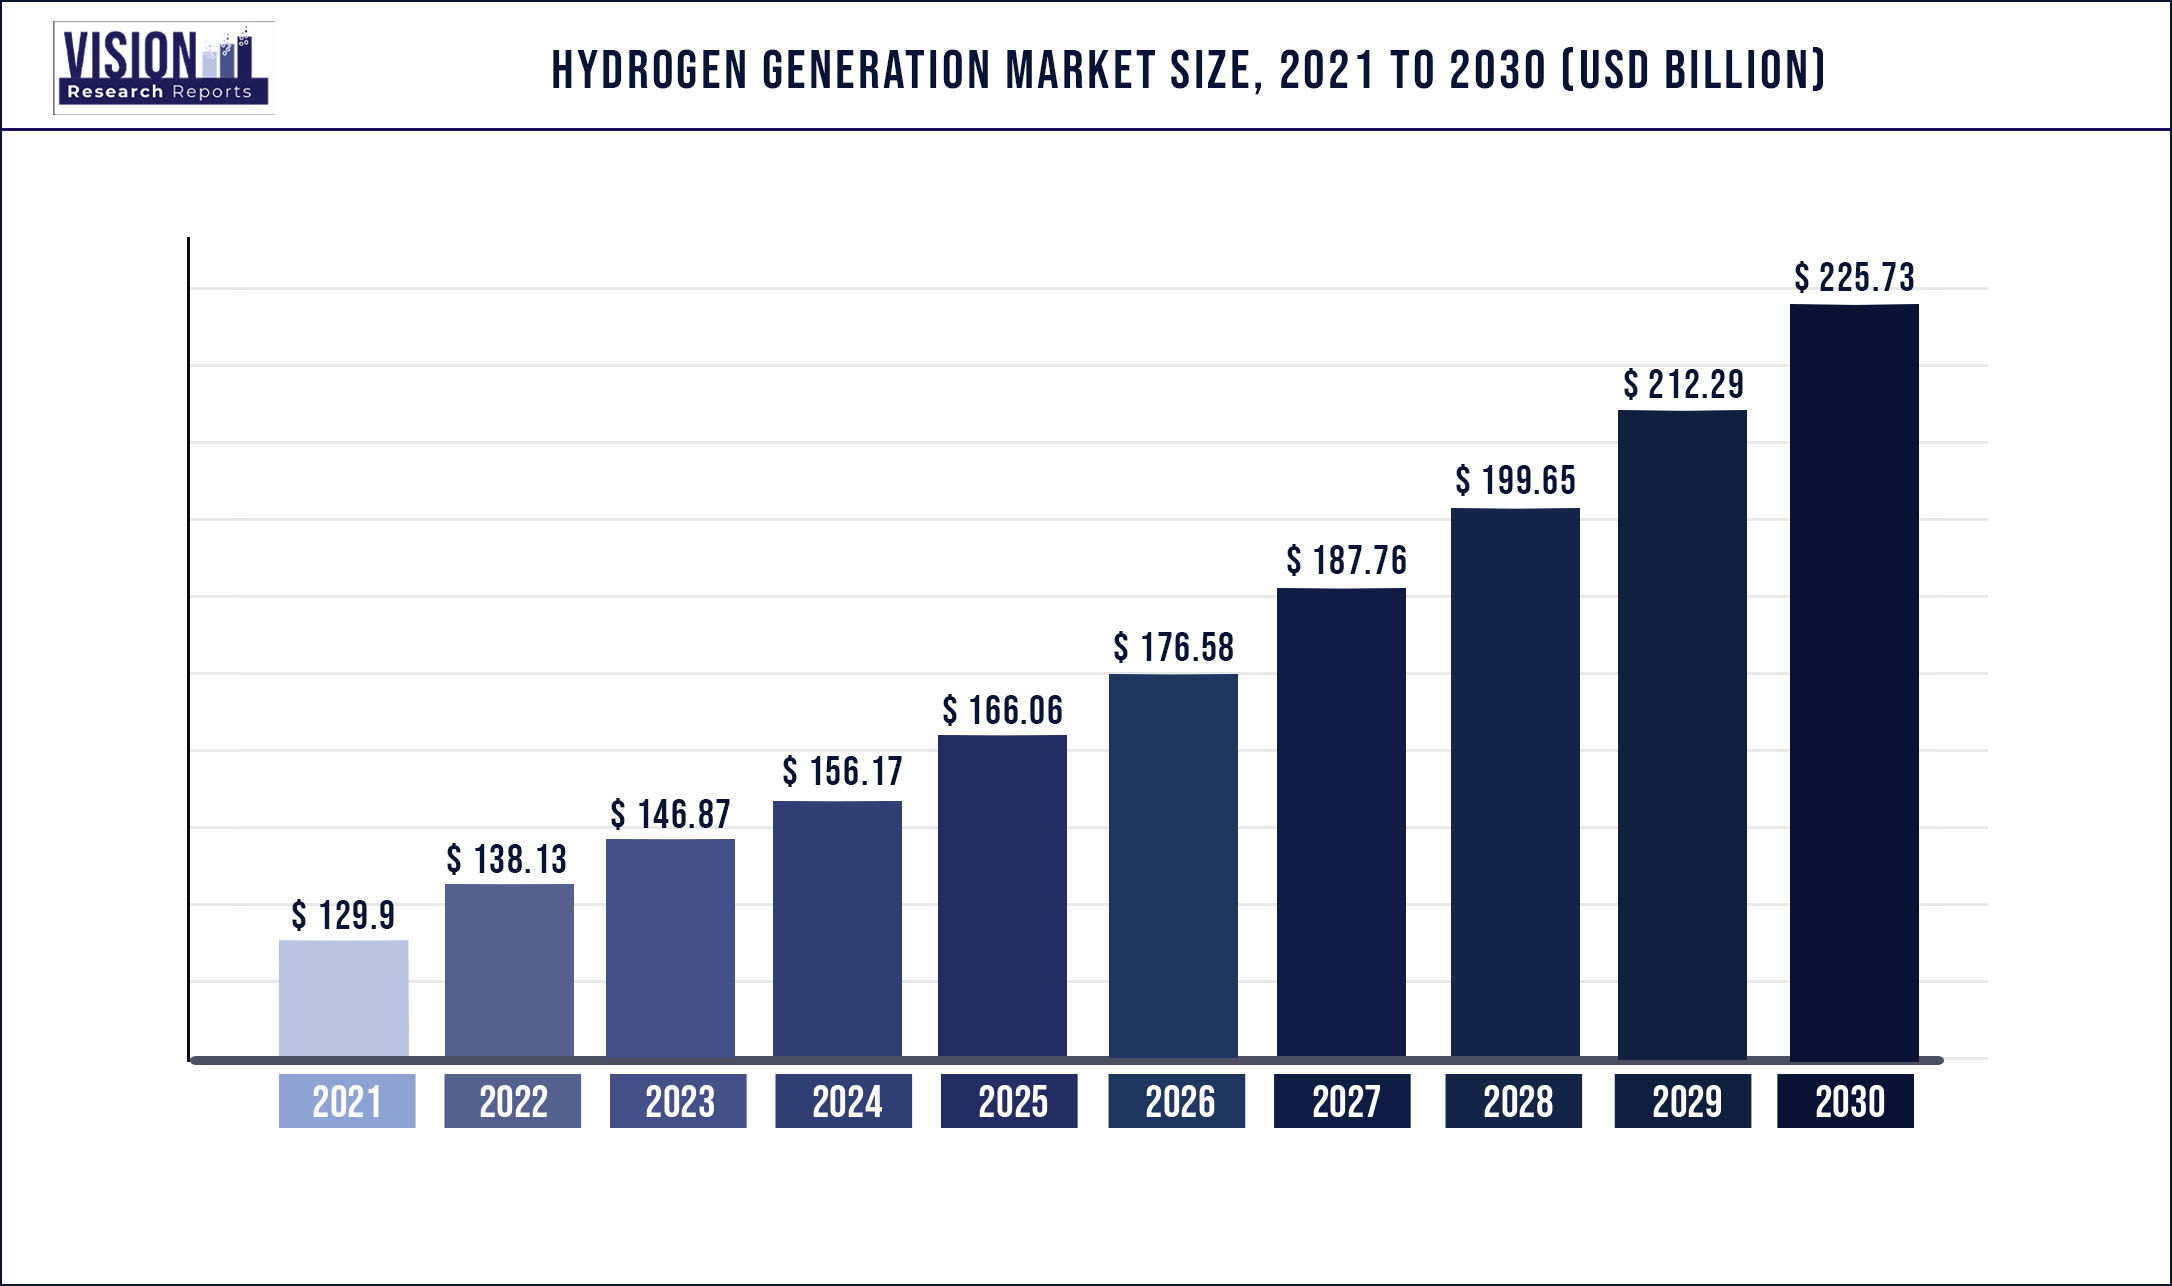 Hydrogen Generation Market Size 2021 to 2030